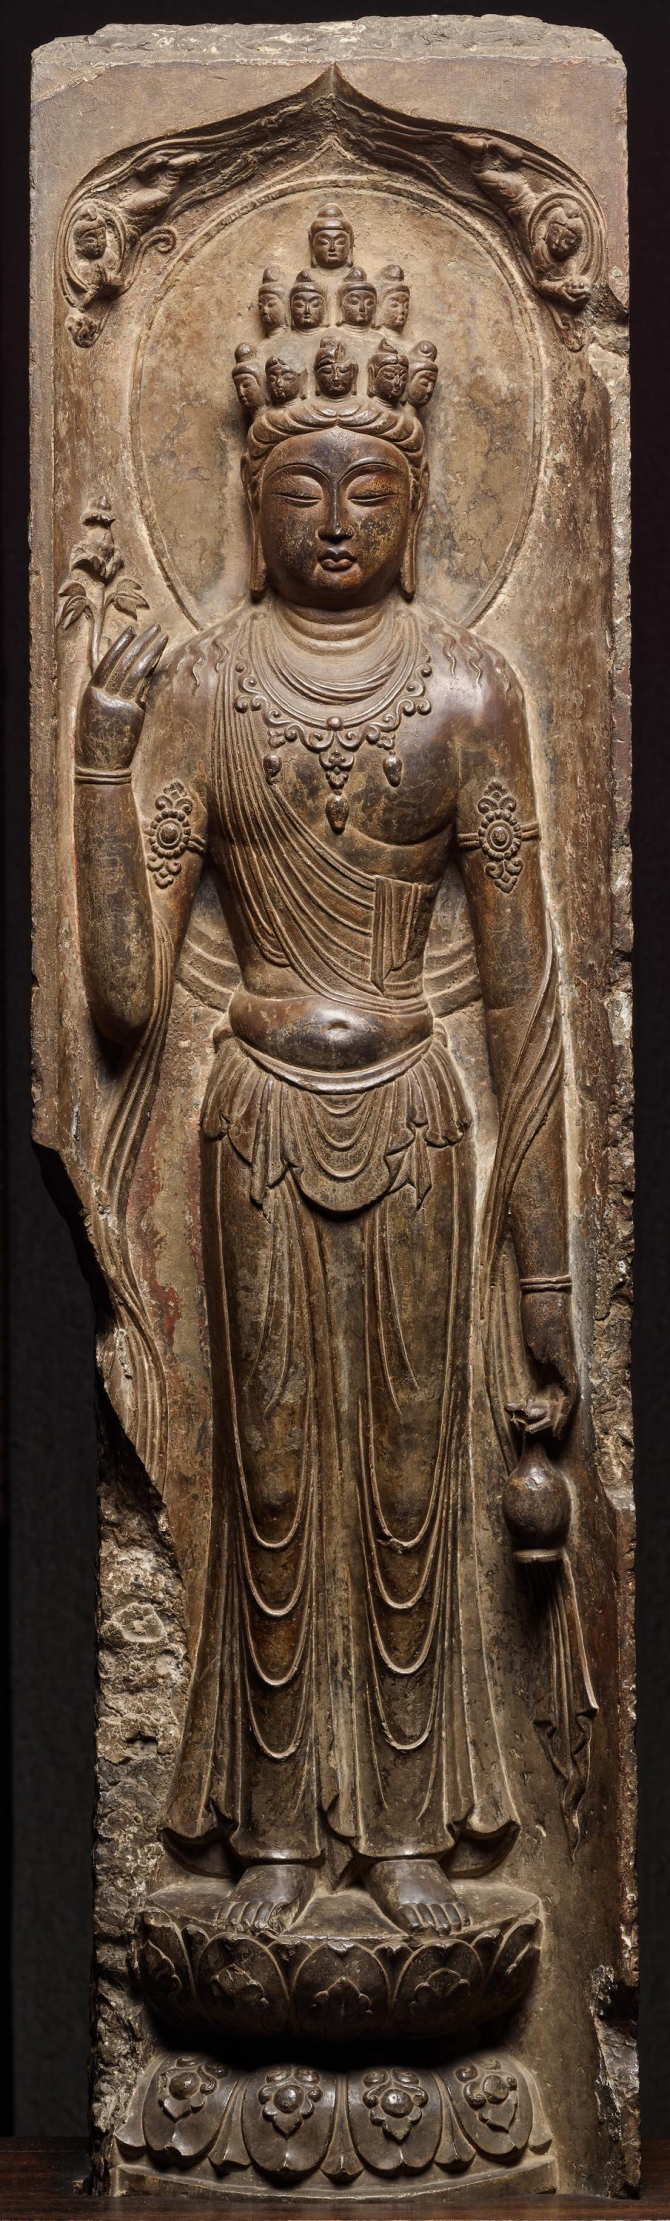 Image of "The Eleven-Headed Bodhisattva Avalokiteśvara in a Niche"